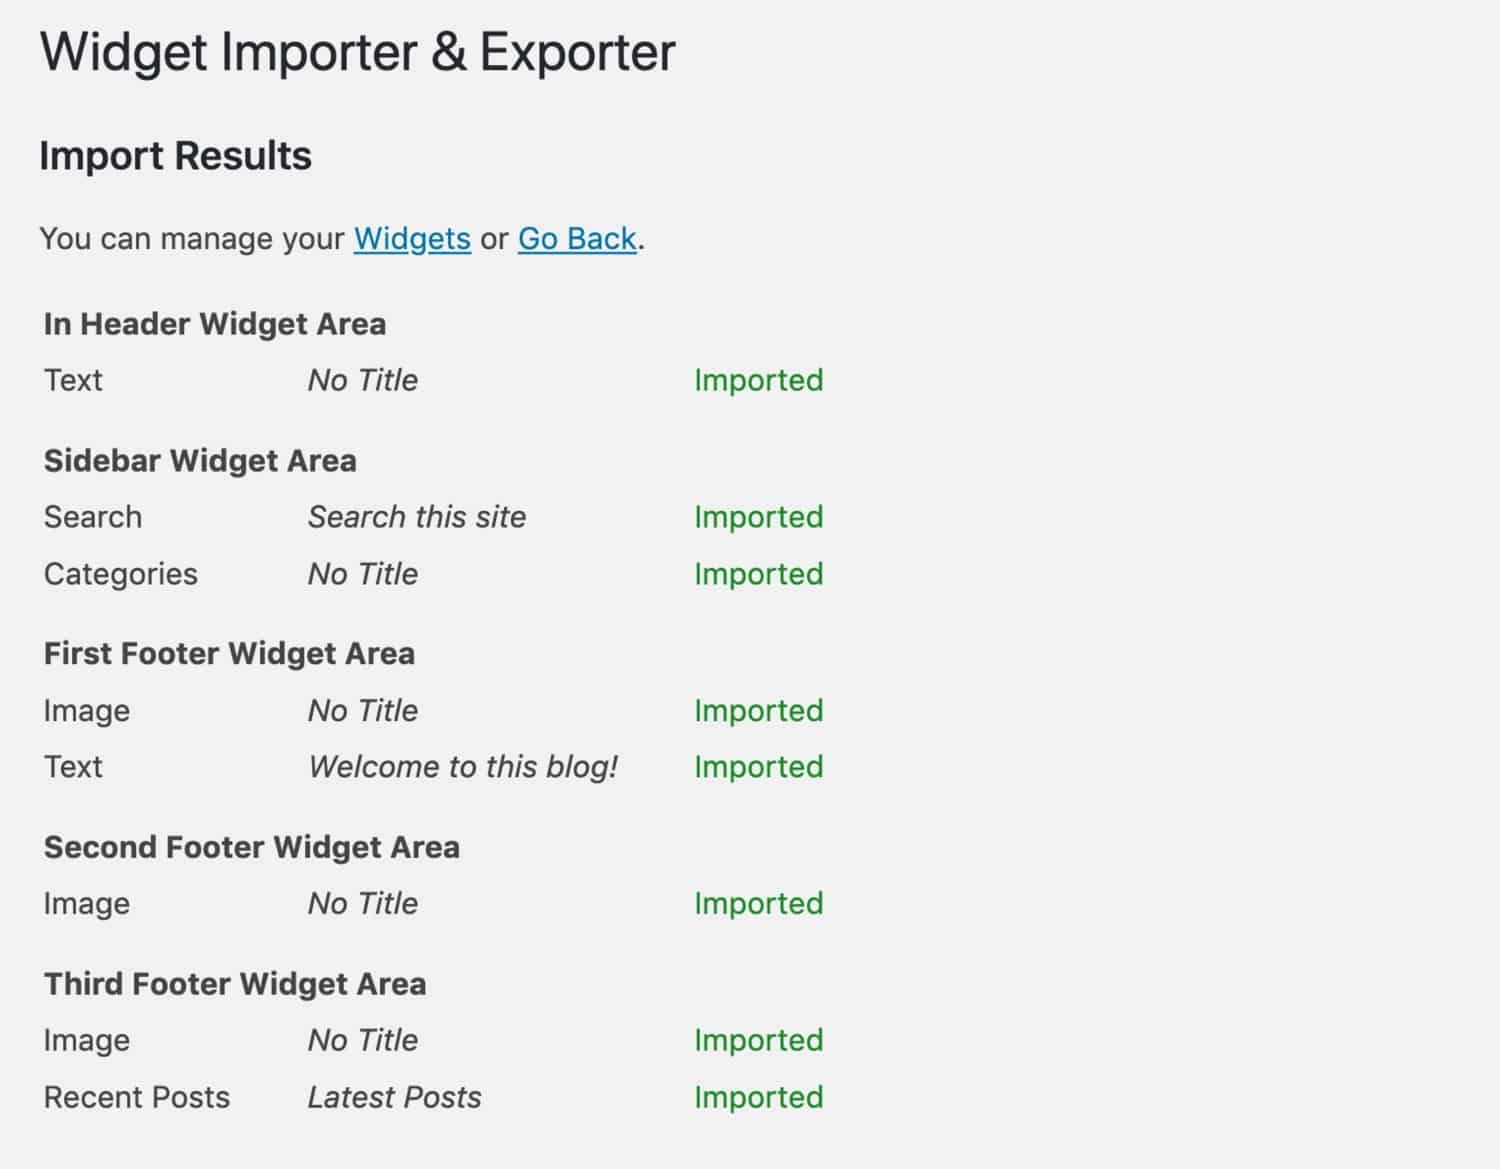 Widget import results